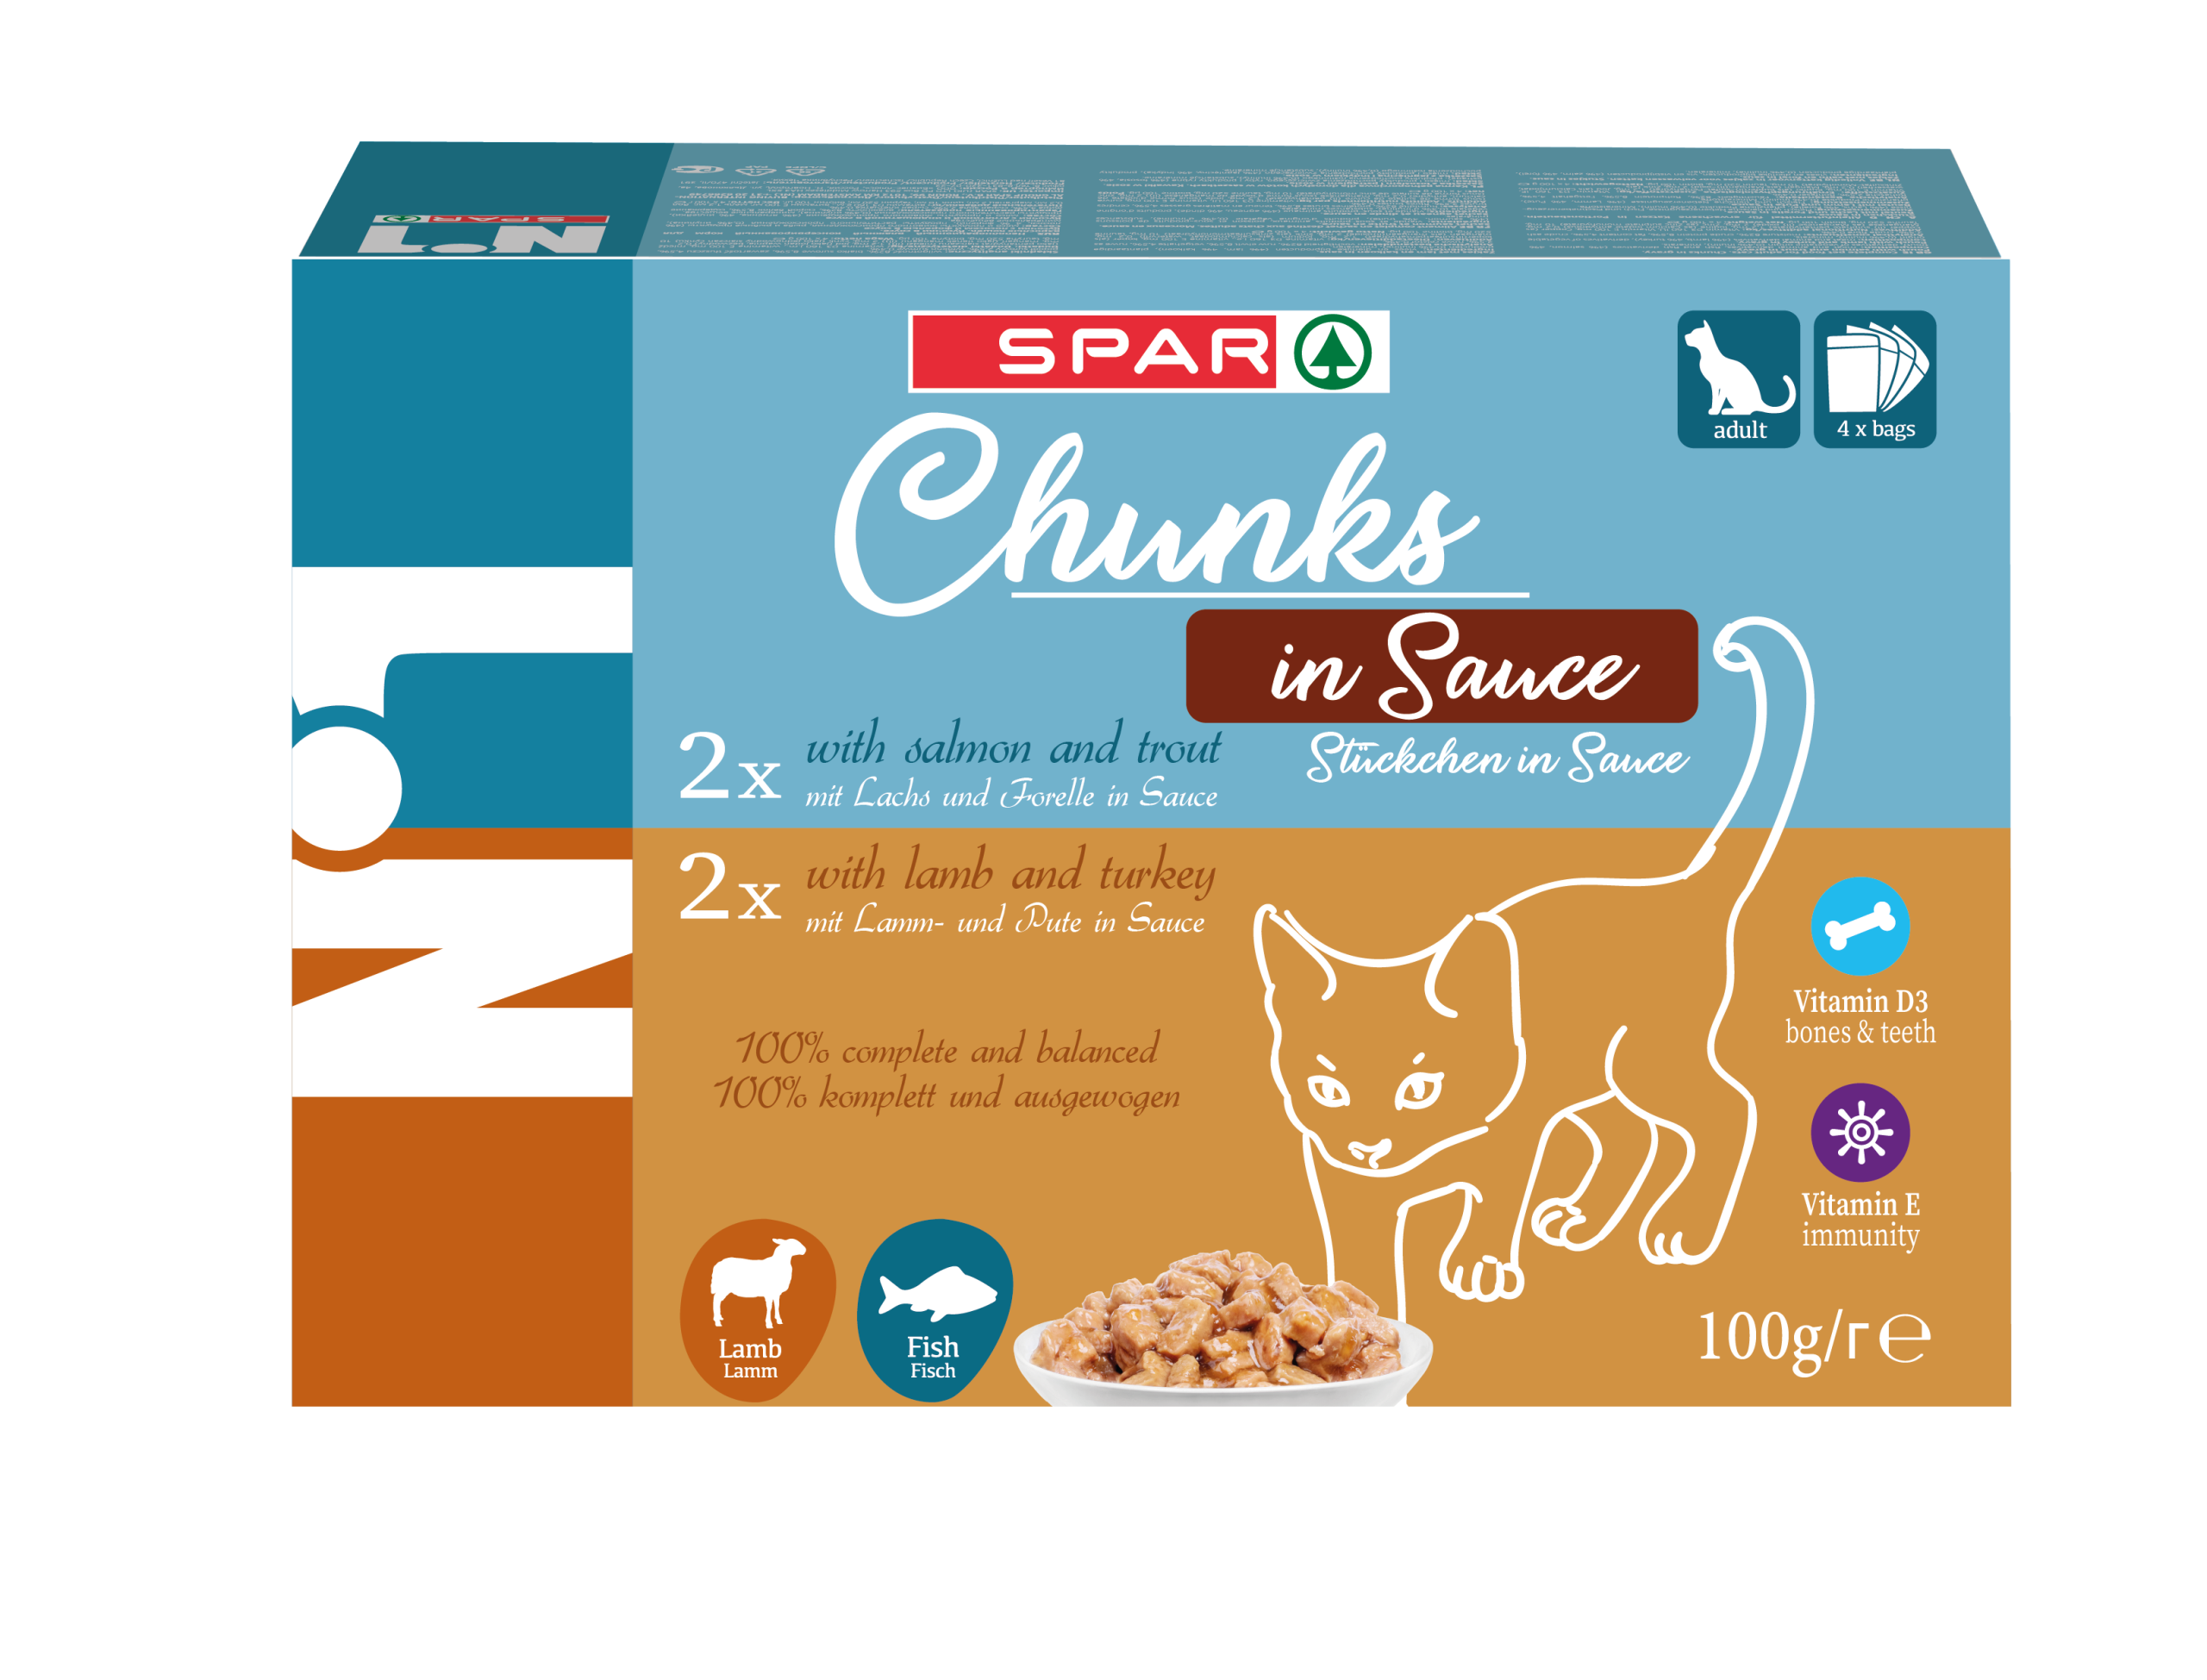 SPAR’s own-brand pet food range is here